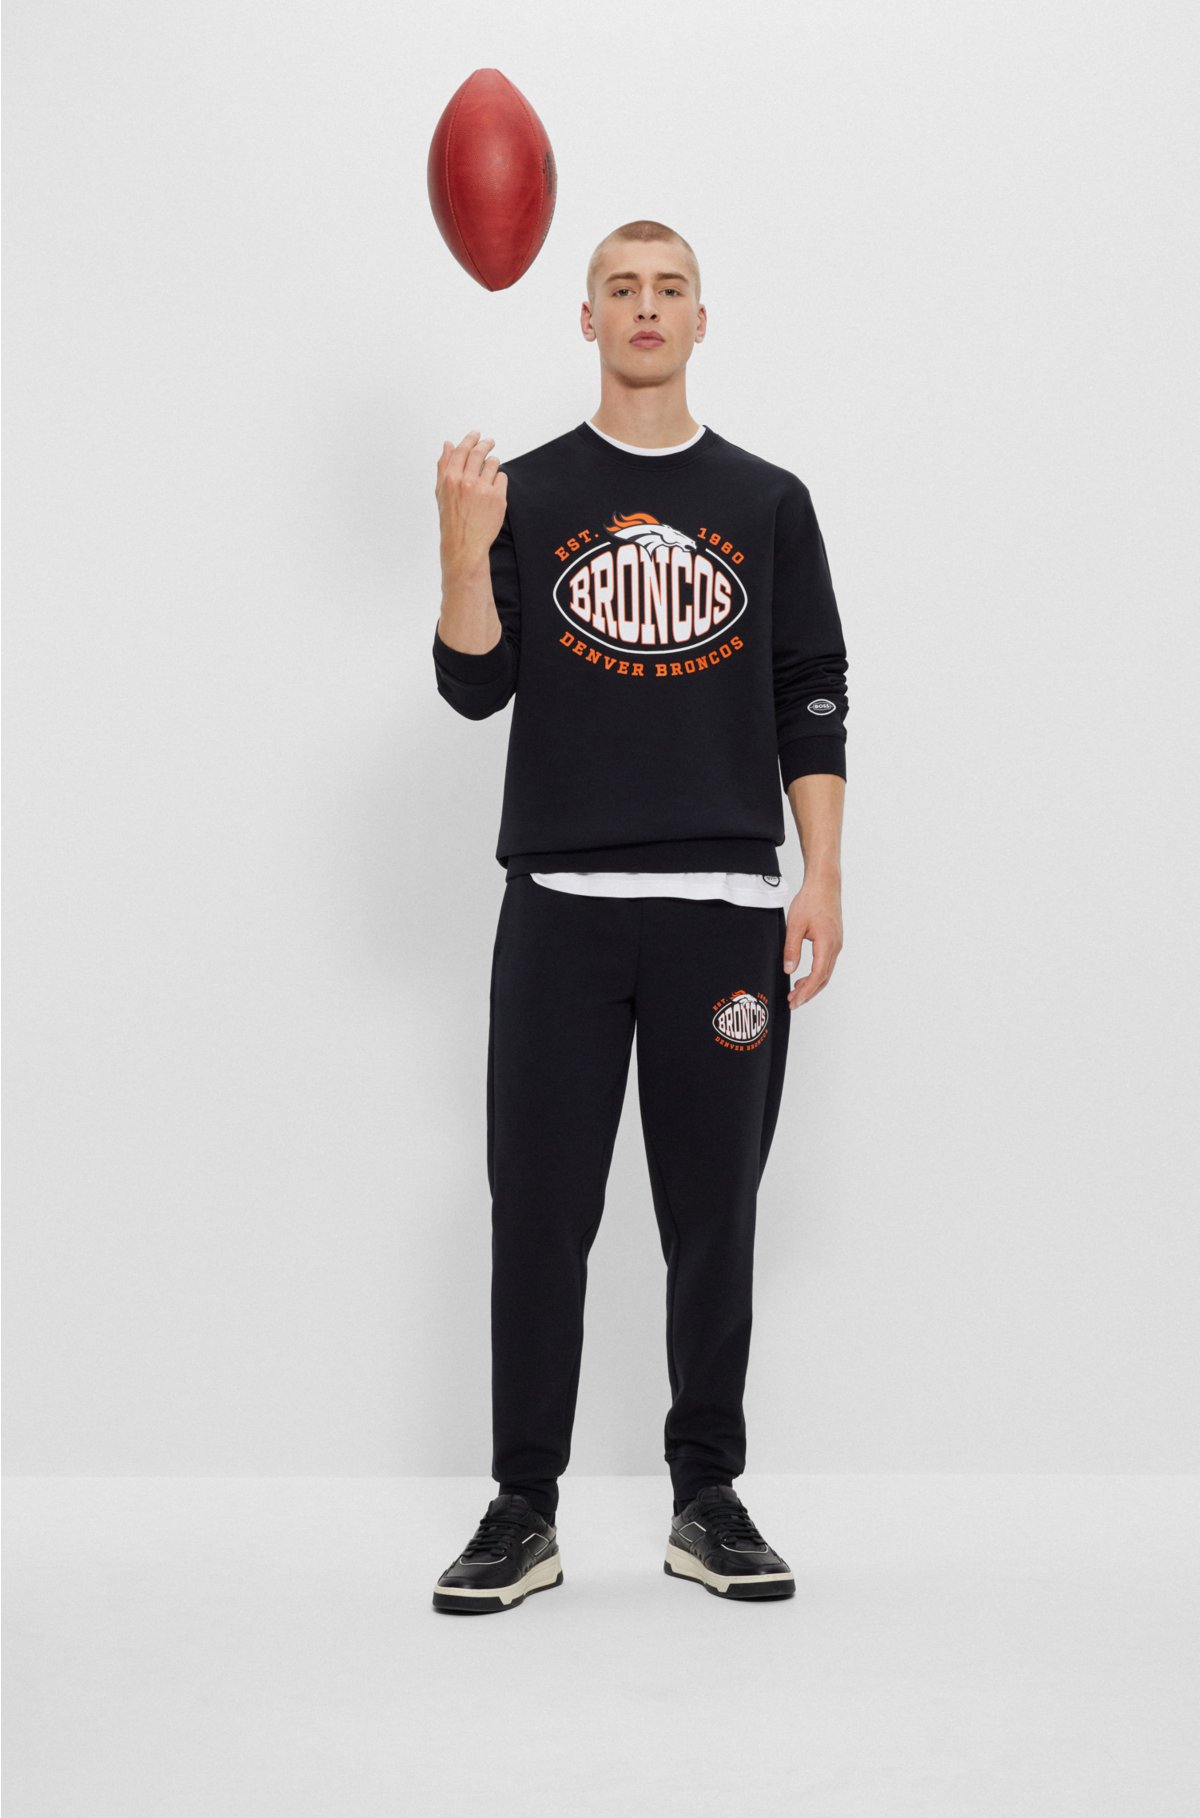 BOSS x NFL cotton-blend sweatshirt with collaborative branding, Broncos